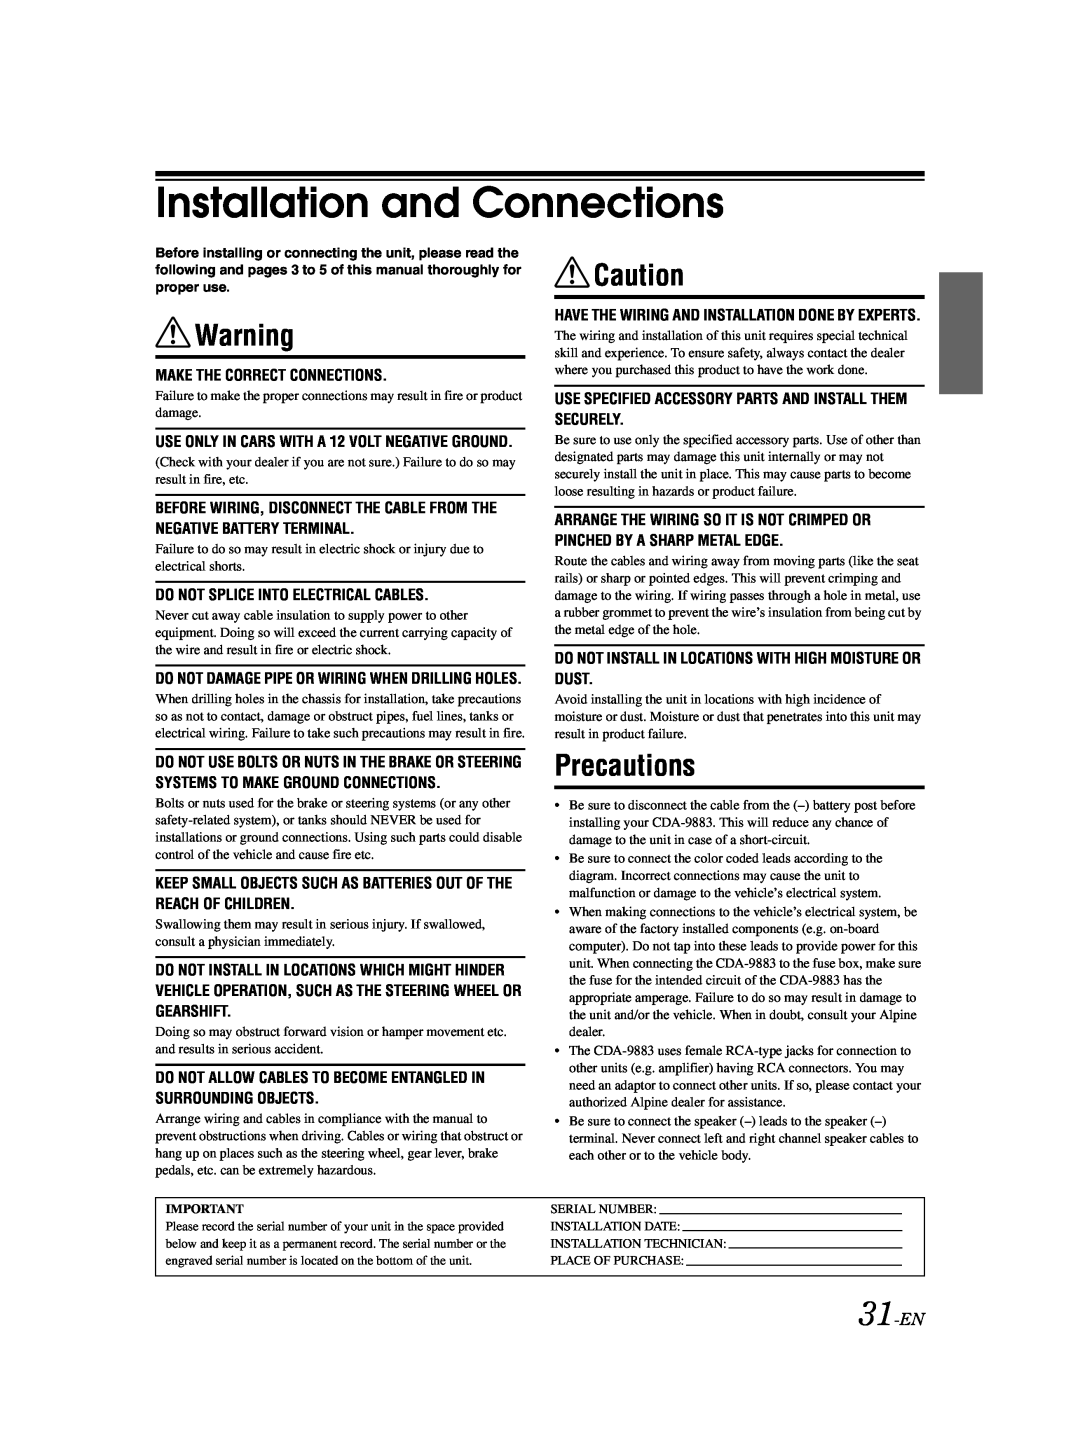 Alpine CDA-9883 owner manual Installation and Connections, Precautions, 31-EN 